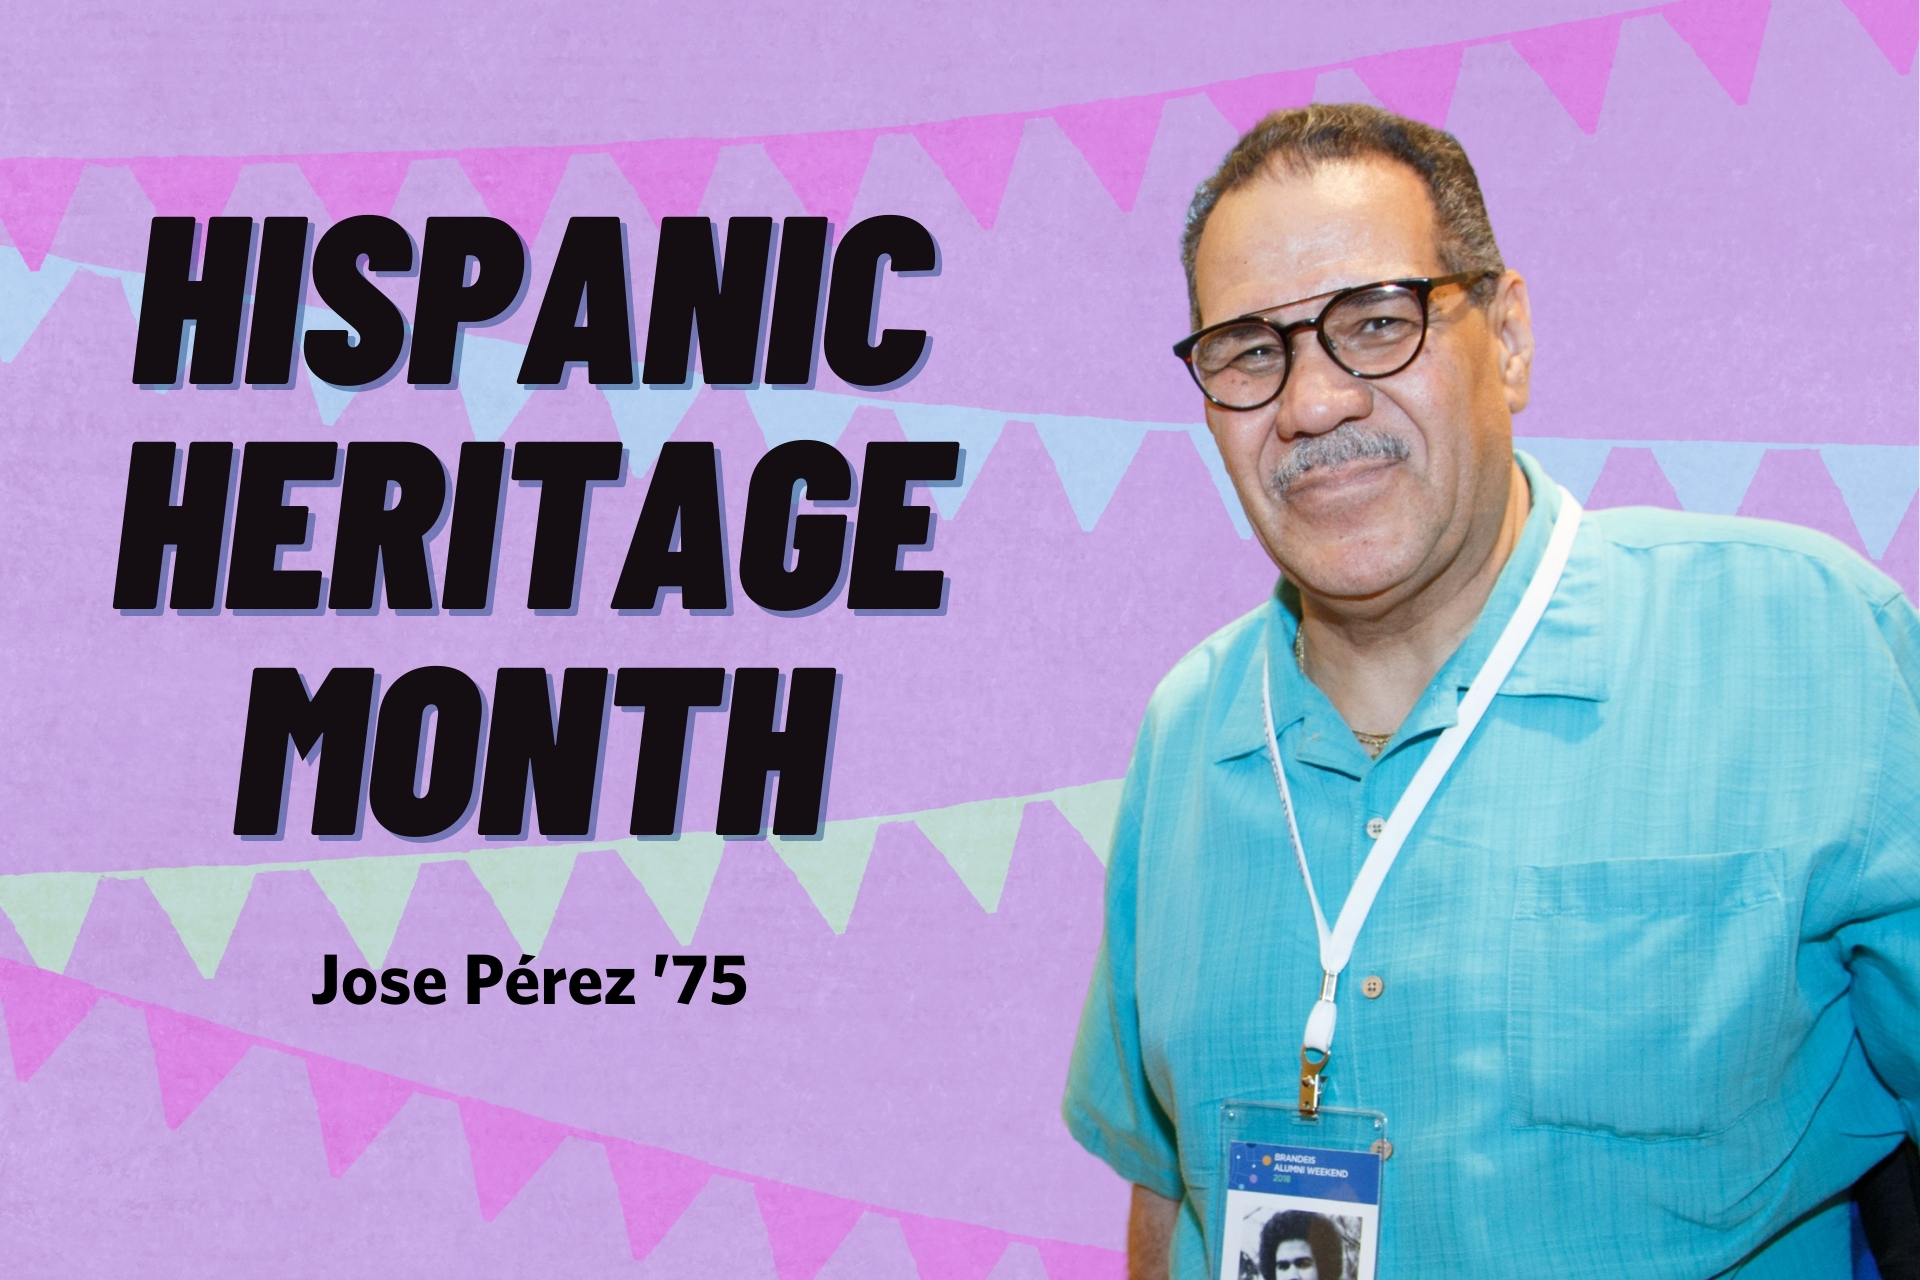 Text that reads "Hispanic Heritage Month, Jose Perez"